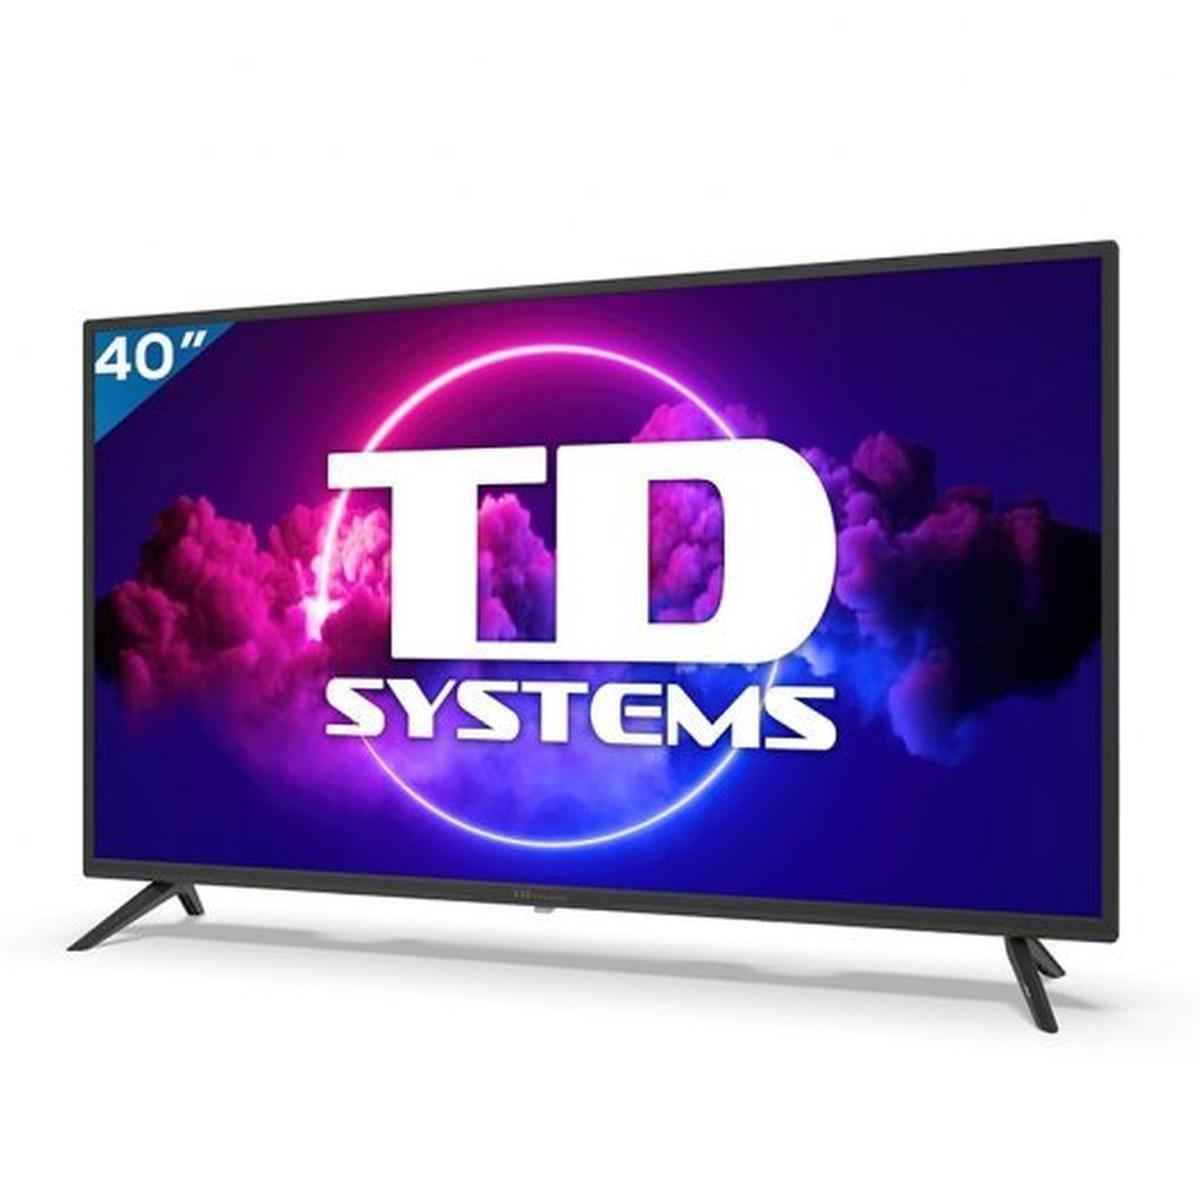 TD Systems Smart TV 40" DLED FullHD 1080p - WiFi, Bluetooth, HDMI, USB - Registratore e lettore multimediale USB - VESA 200x100mm